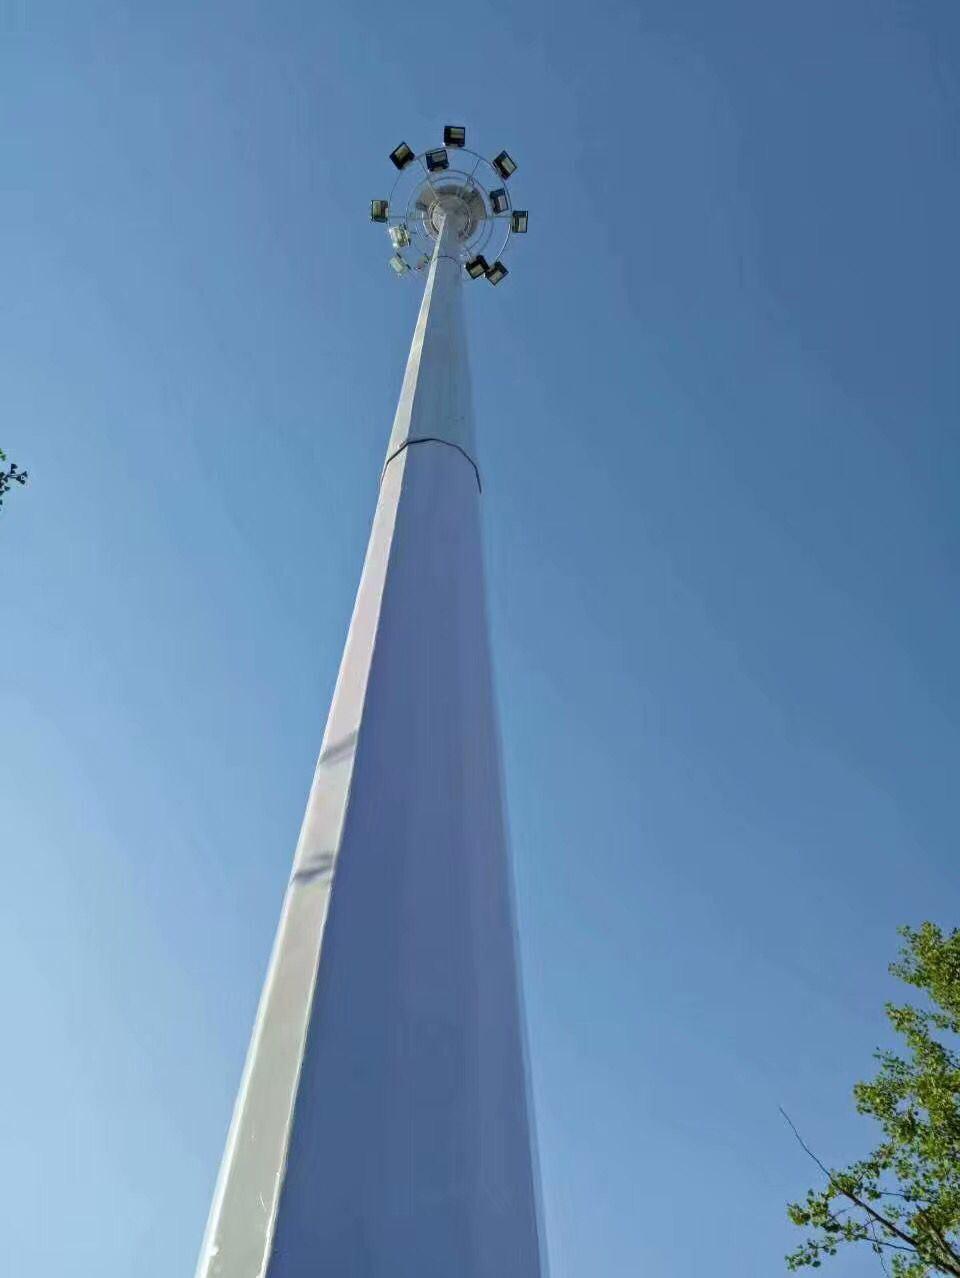 30m High Power LED Flood High Mast Lighting System